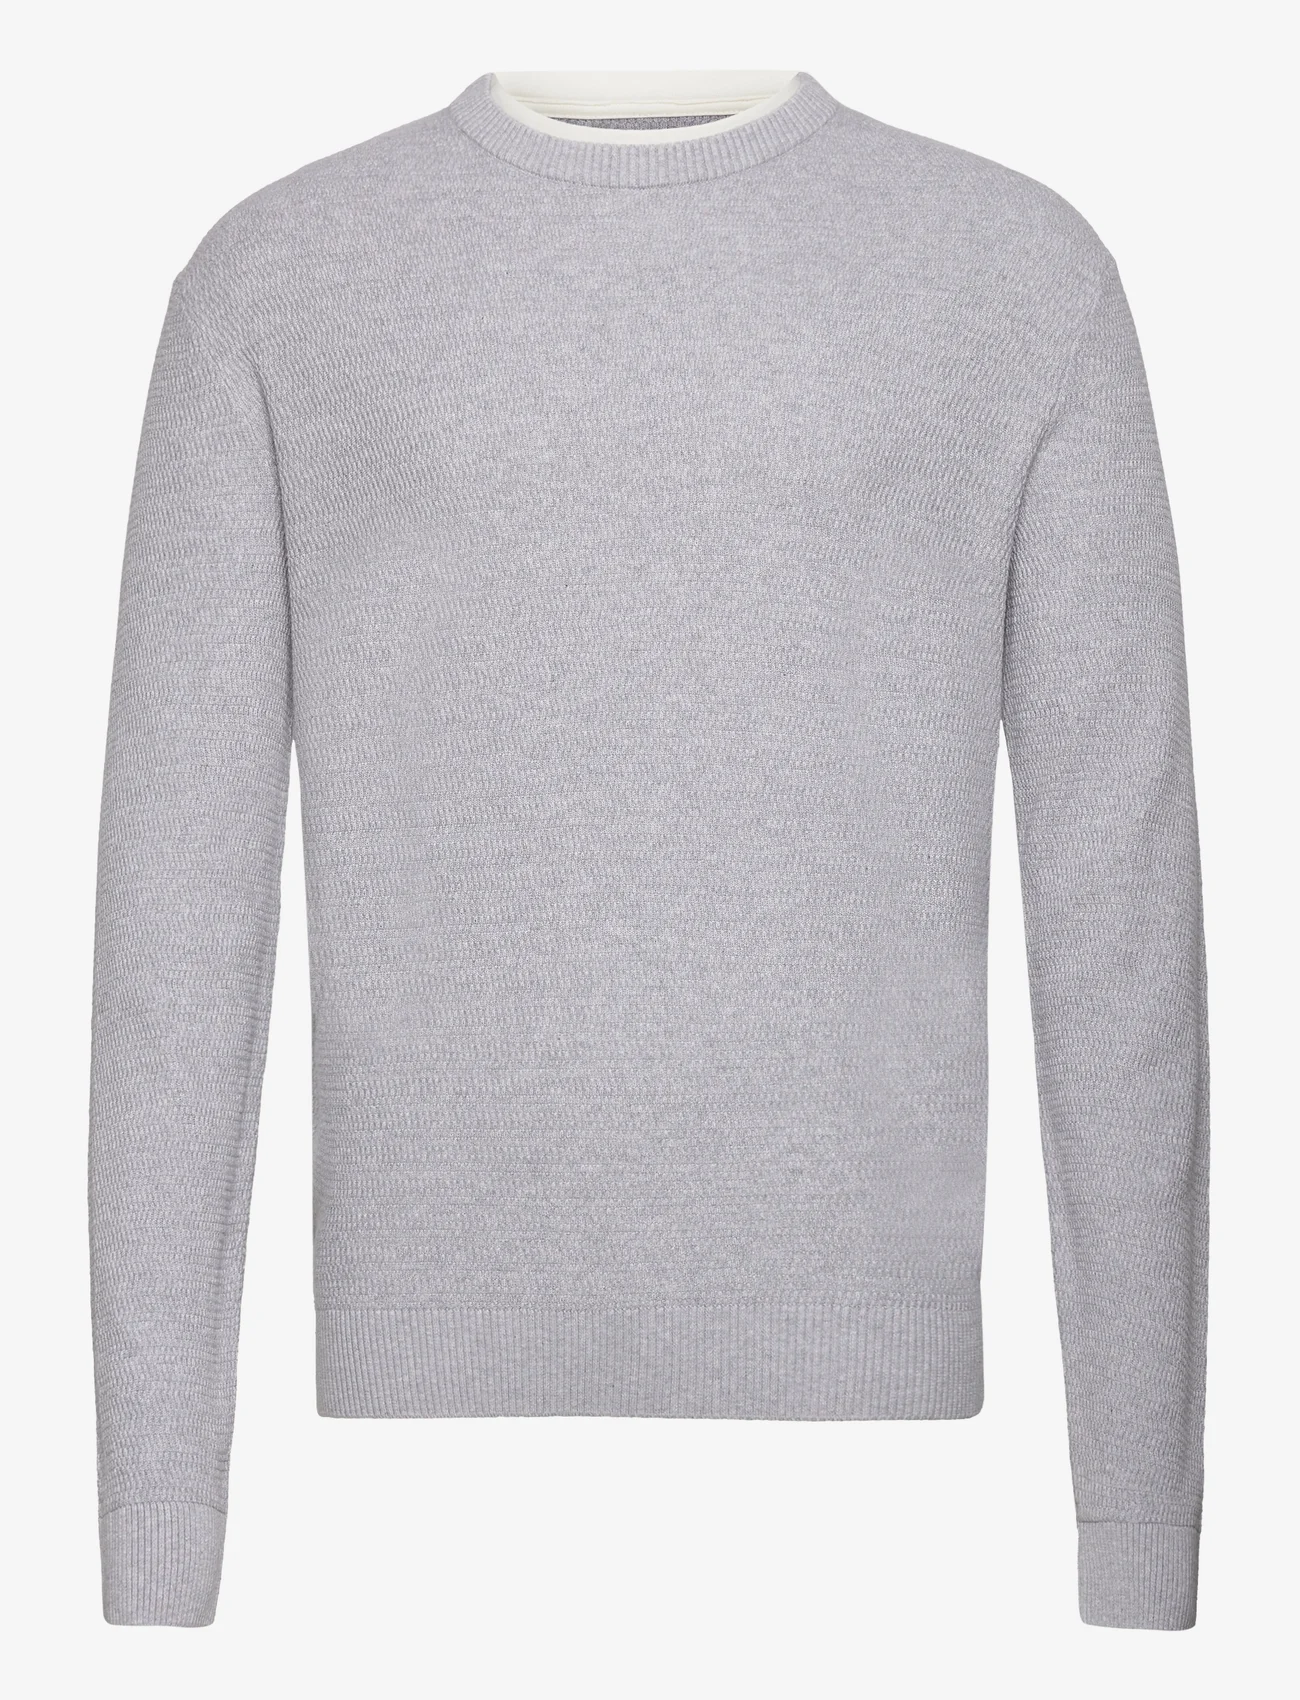 Tom Tailor - structured doublelayer knit - rundhals - light stone grey melange - 0